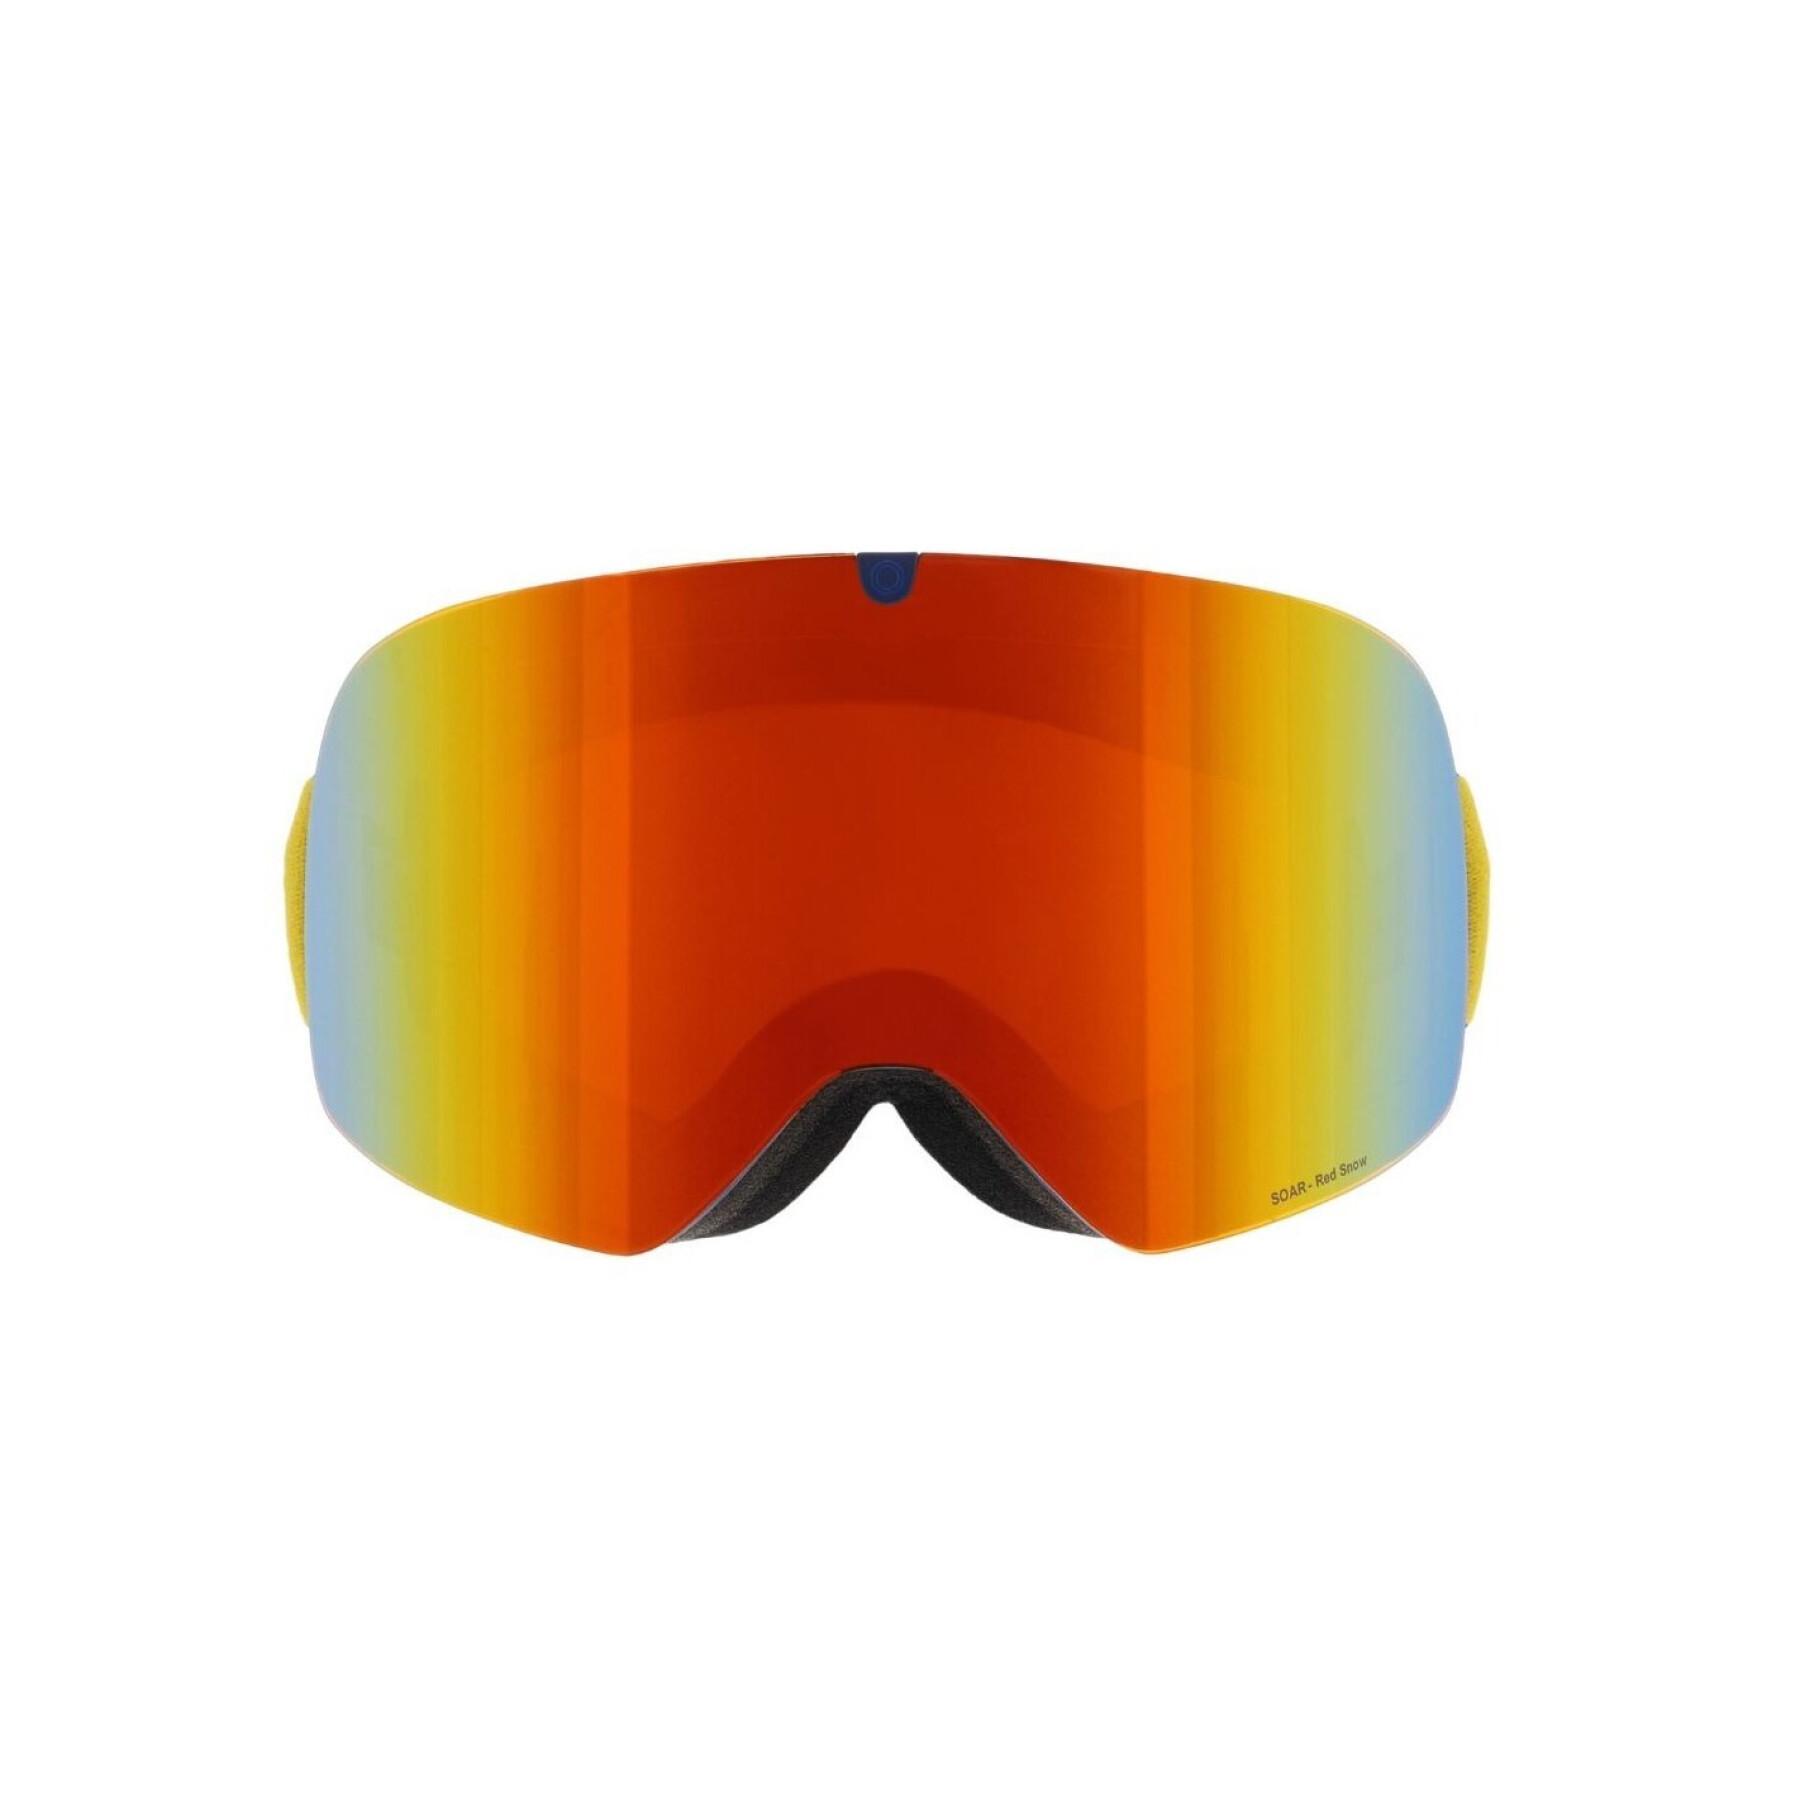 Masque de ski Redbull Spect Eyewear Soar